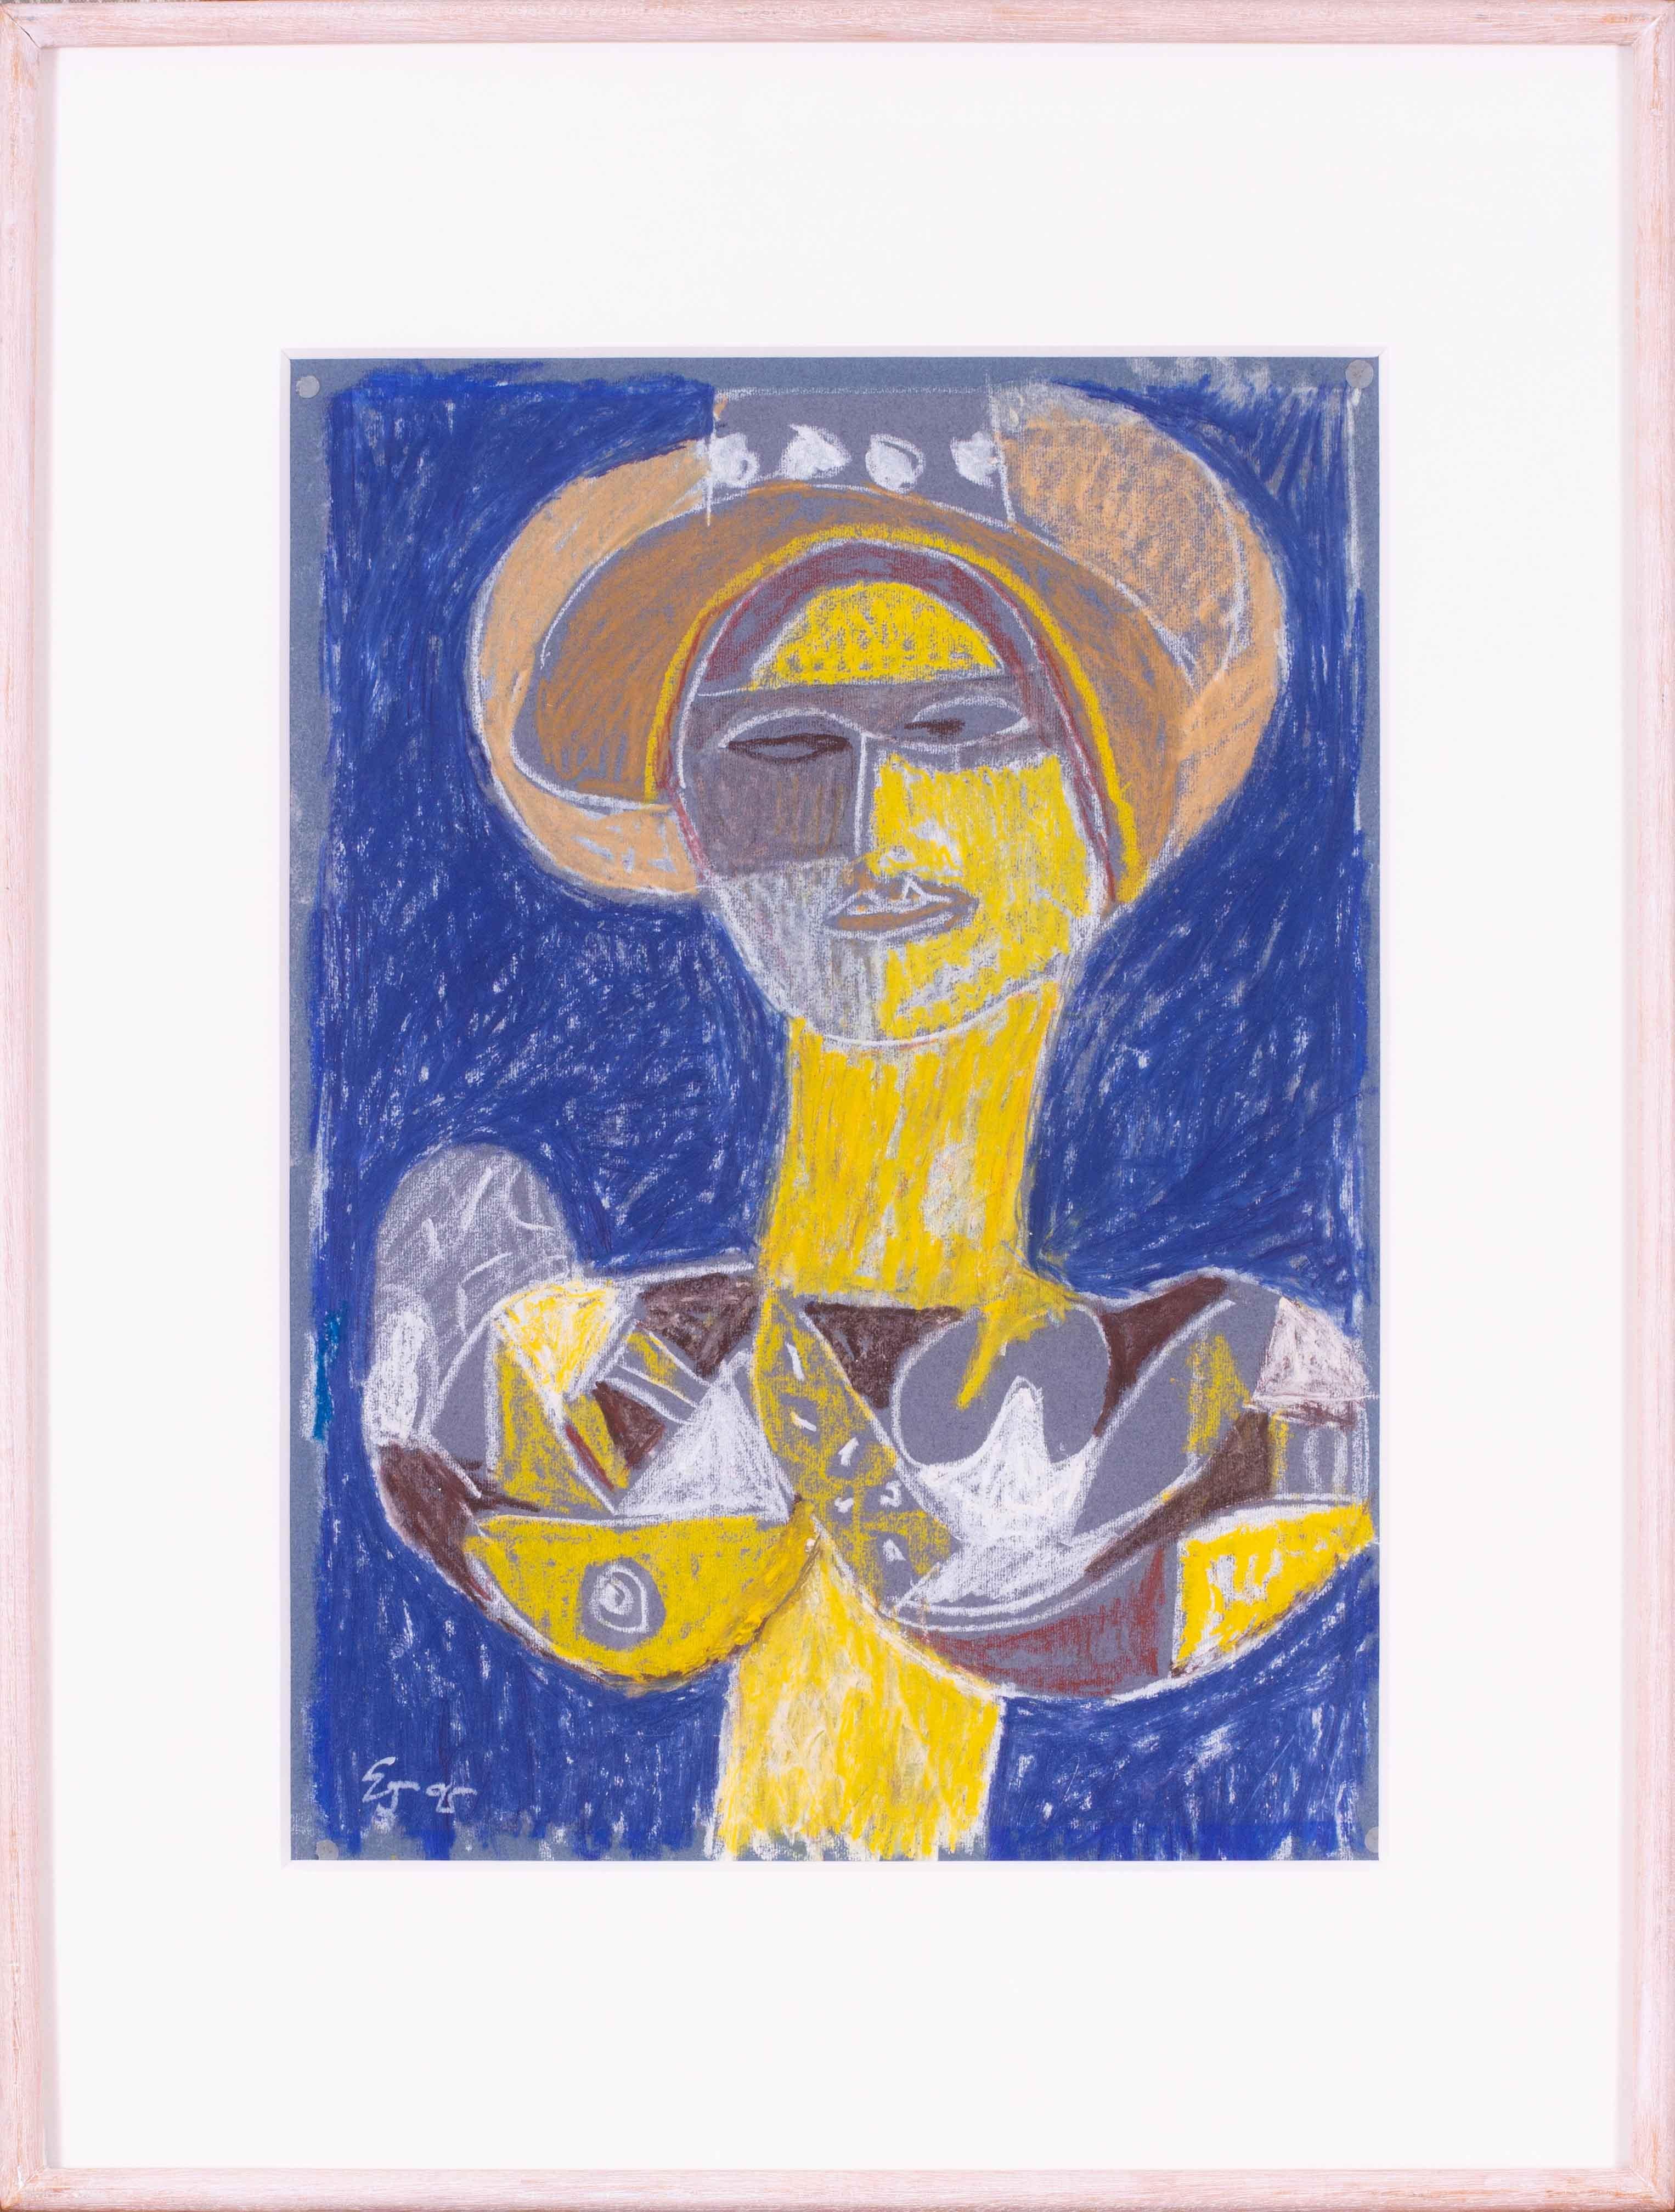 Femme abstraite en bleu et jaune par l'artiste Modern British 20th C, Ewart Johns.